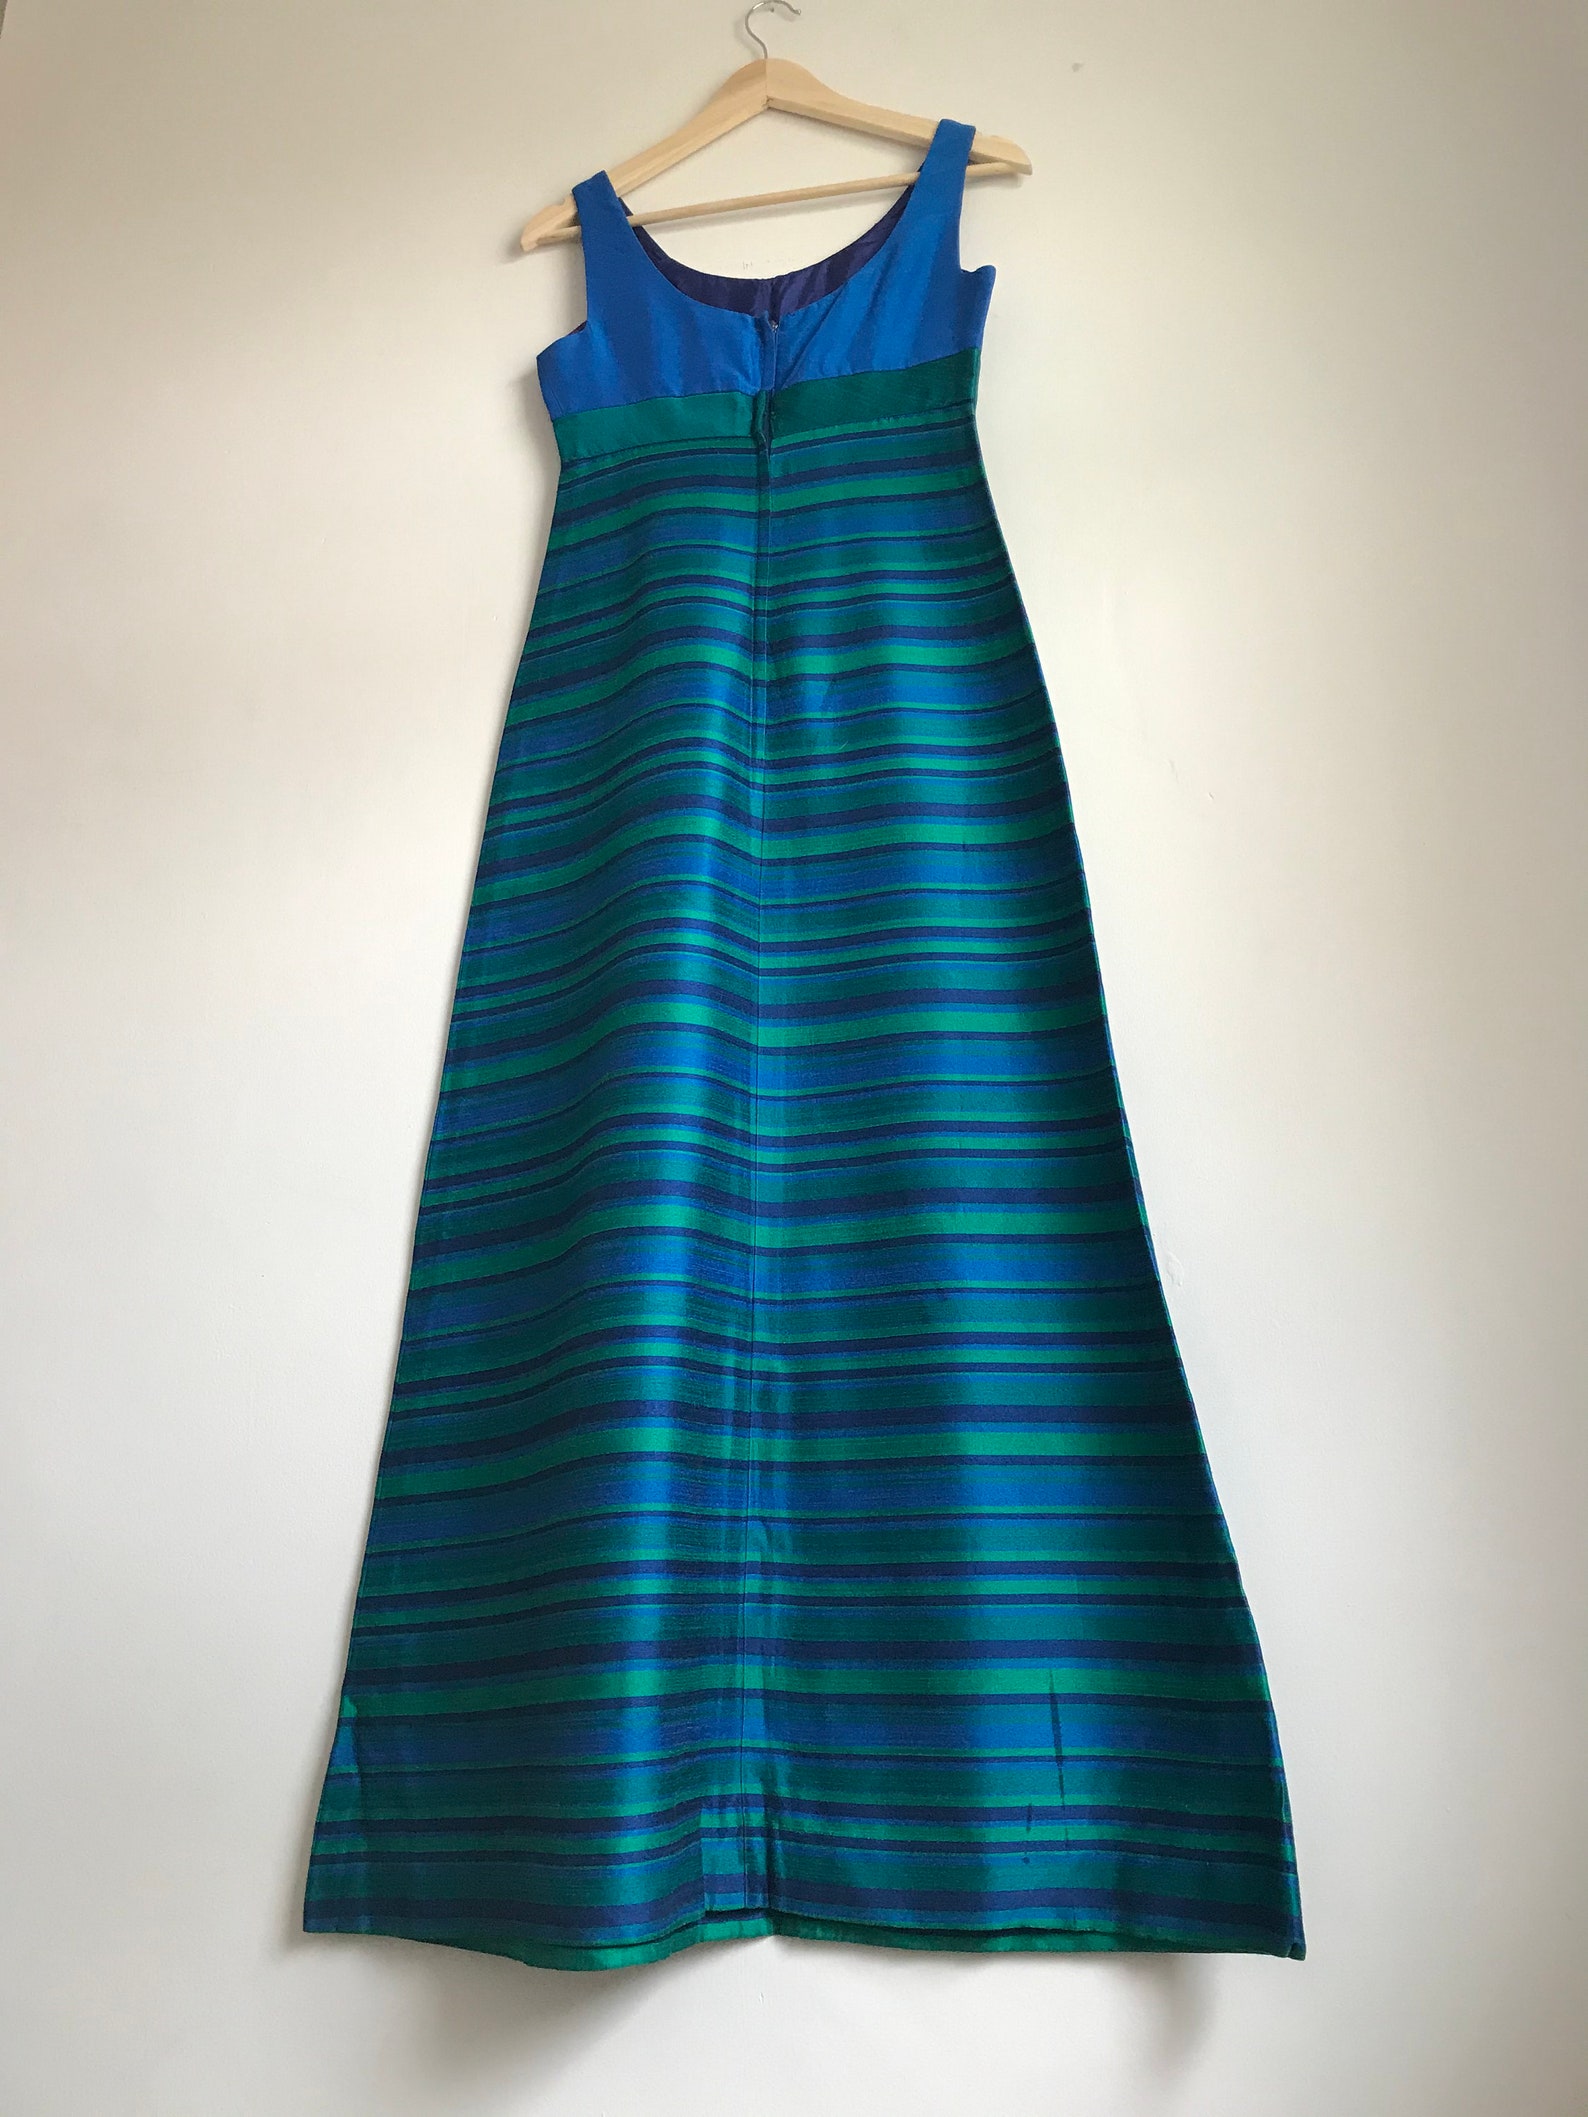 Stunning 1960s Empire Line Maxi Dress by Berketex Mayfair | Etsy